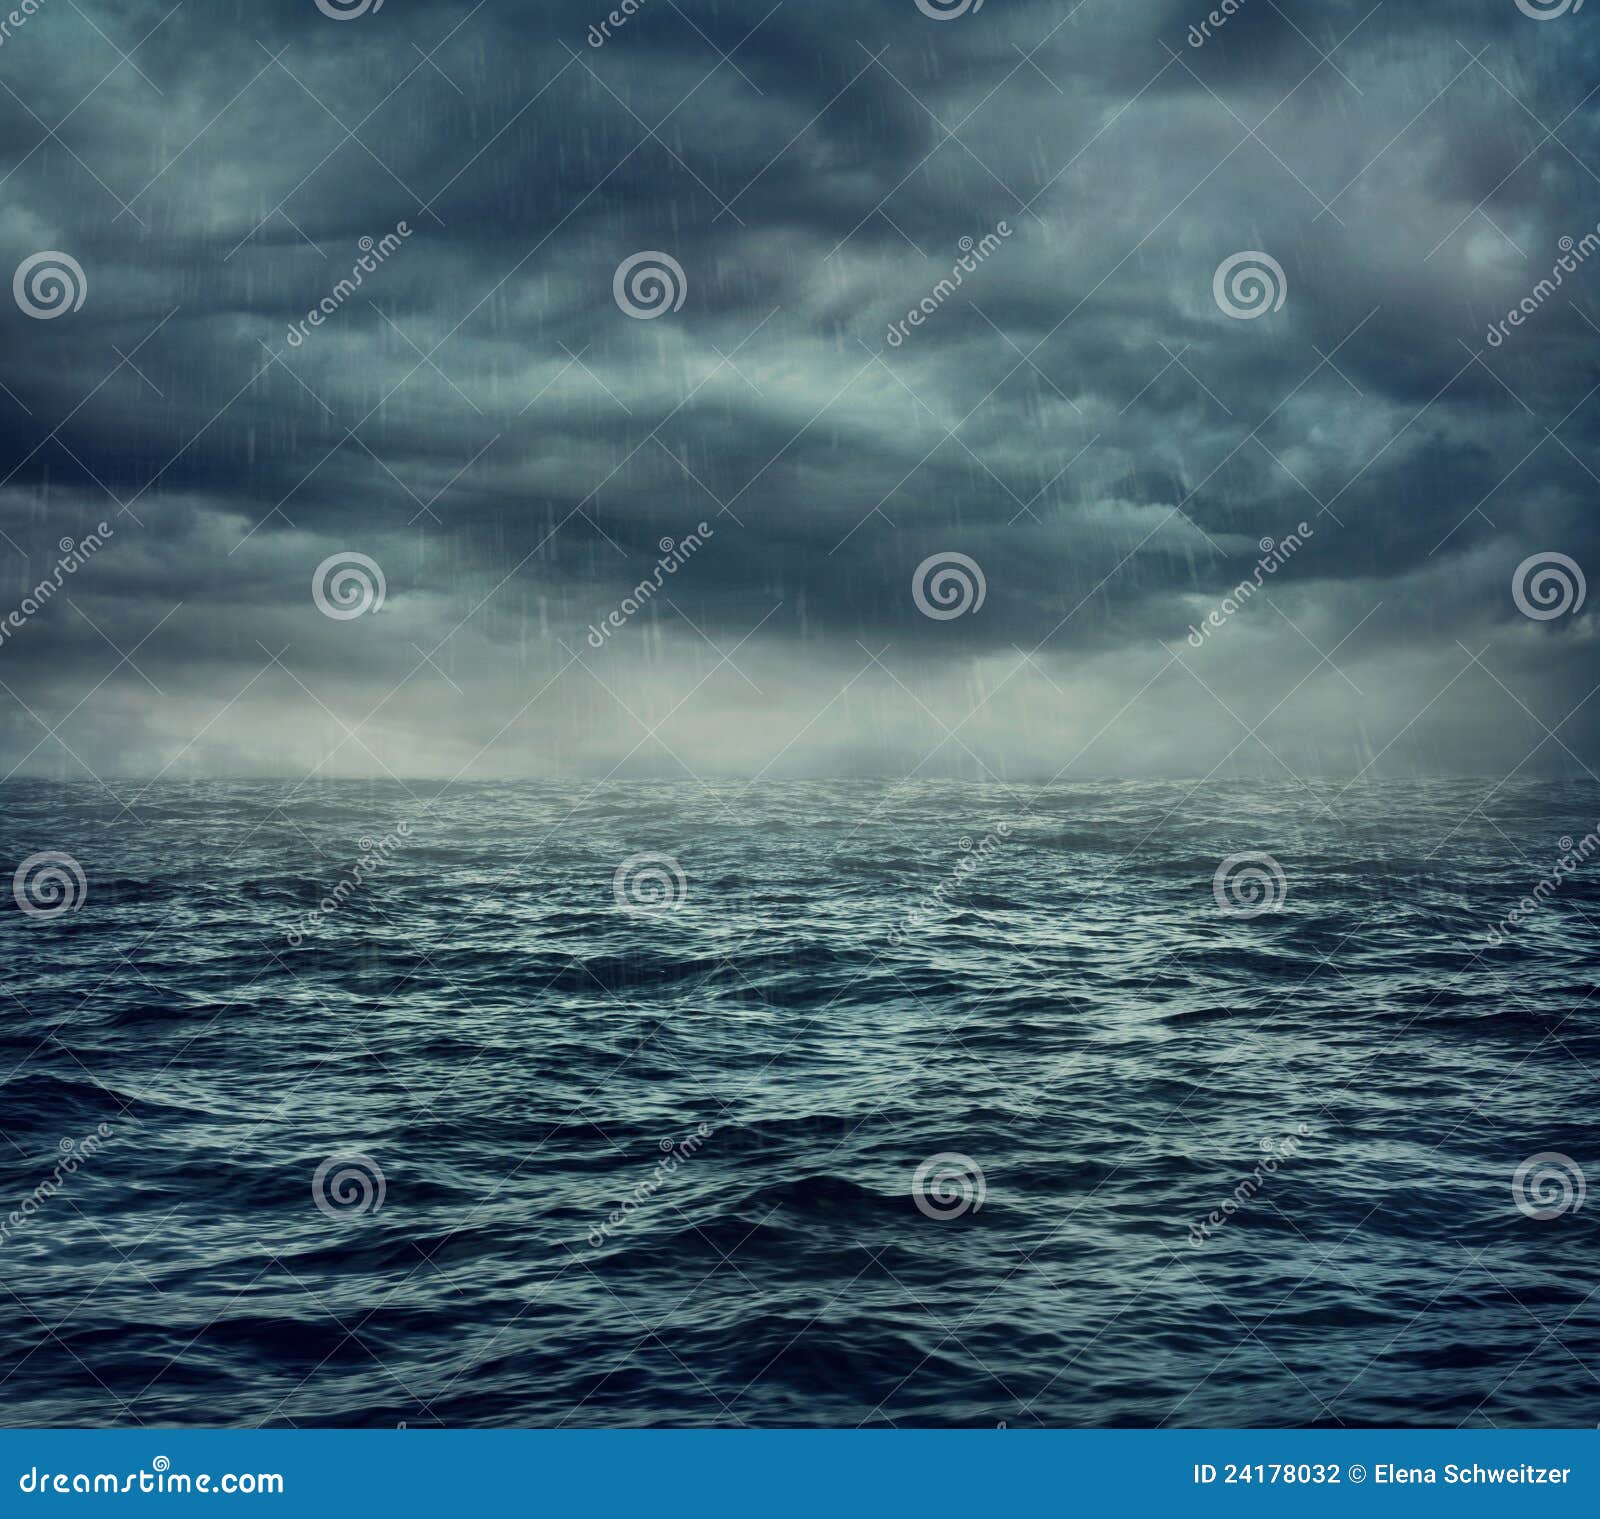 rain over the stormy sea